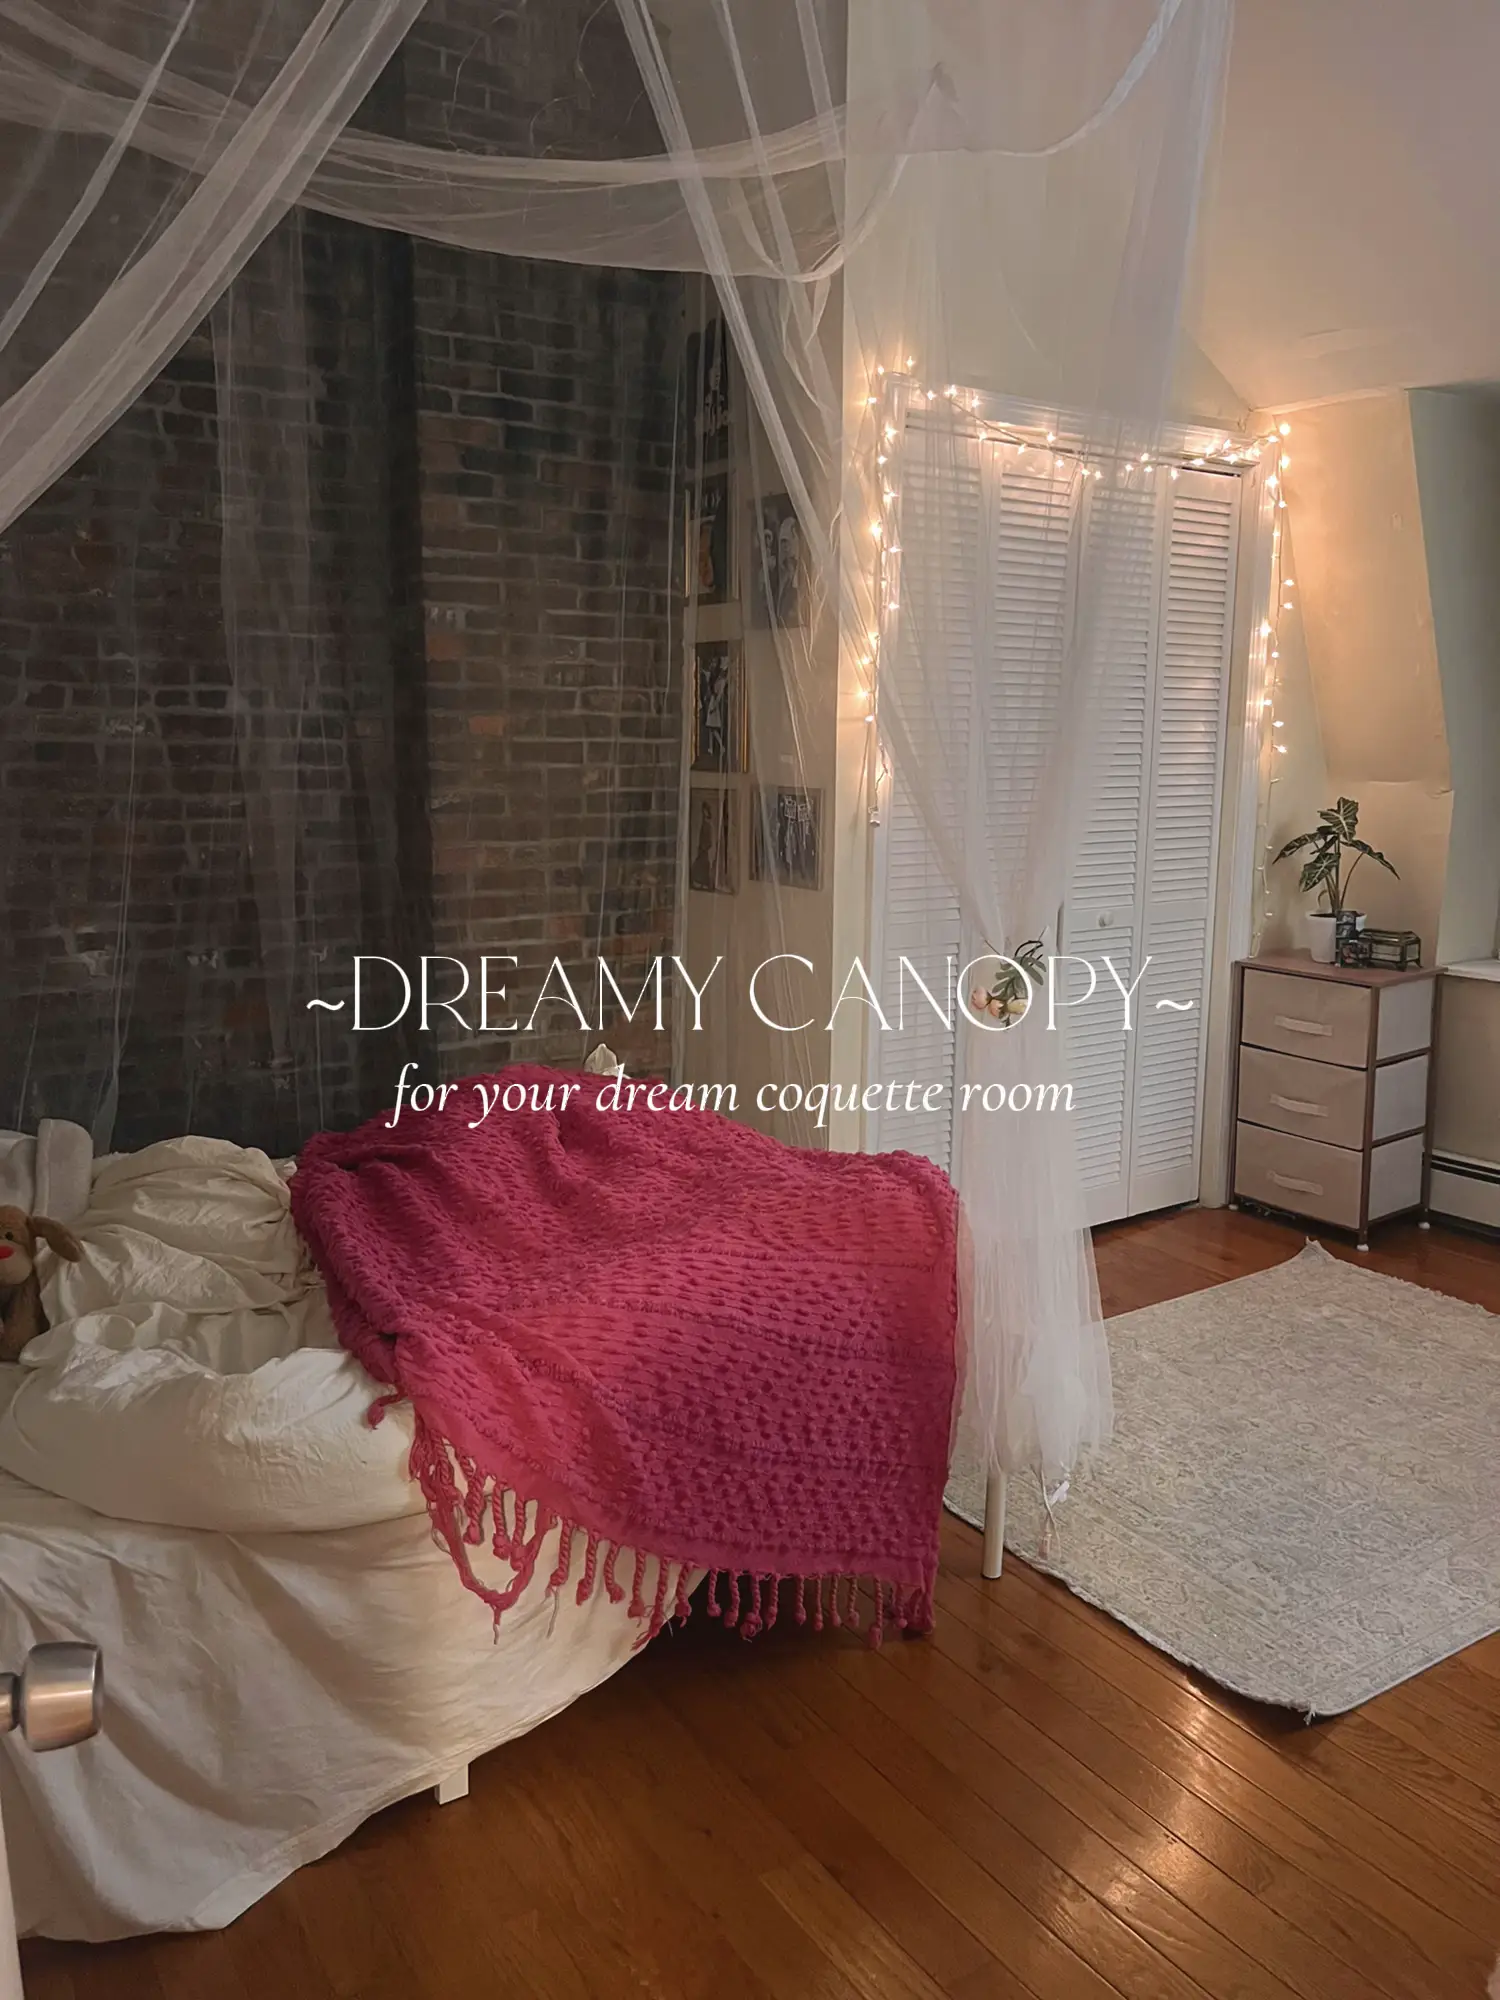 Coquette room  Room inspo, Lana del rey, Dream room inspiration